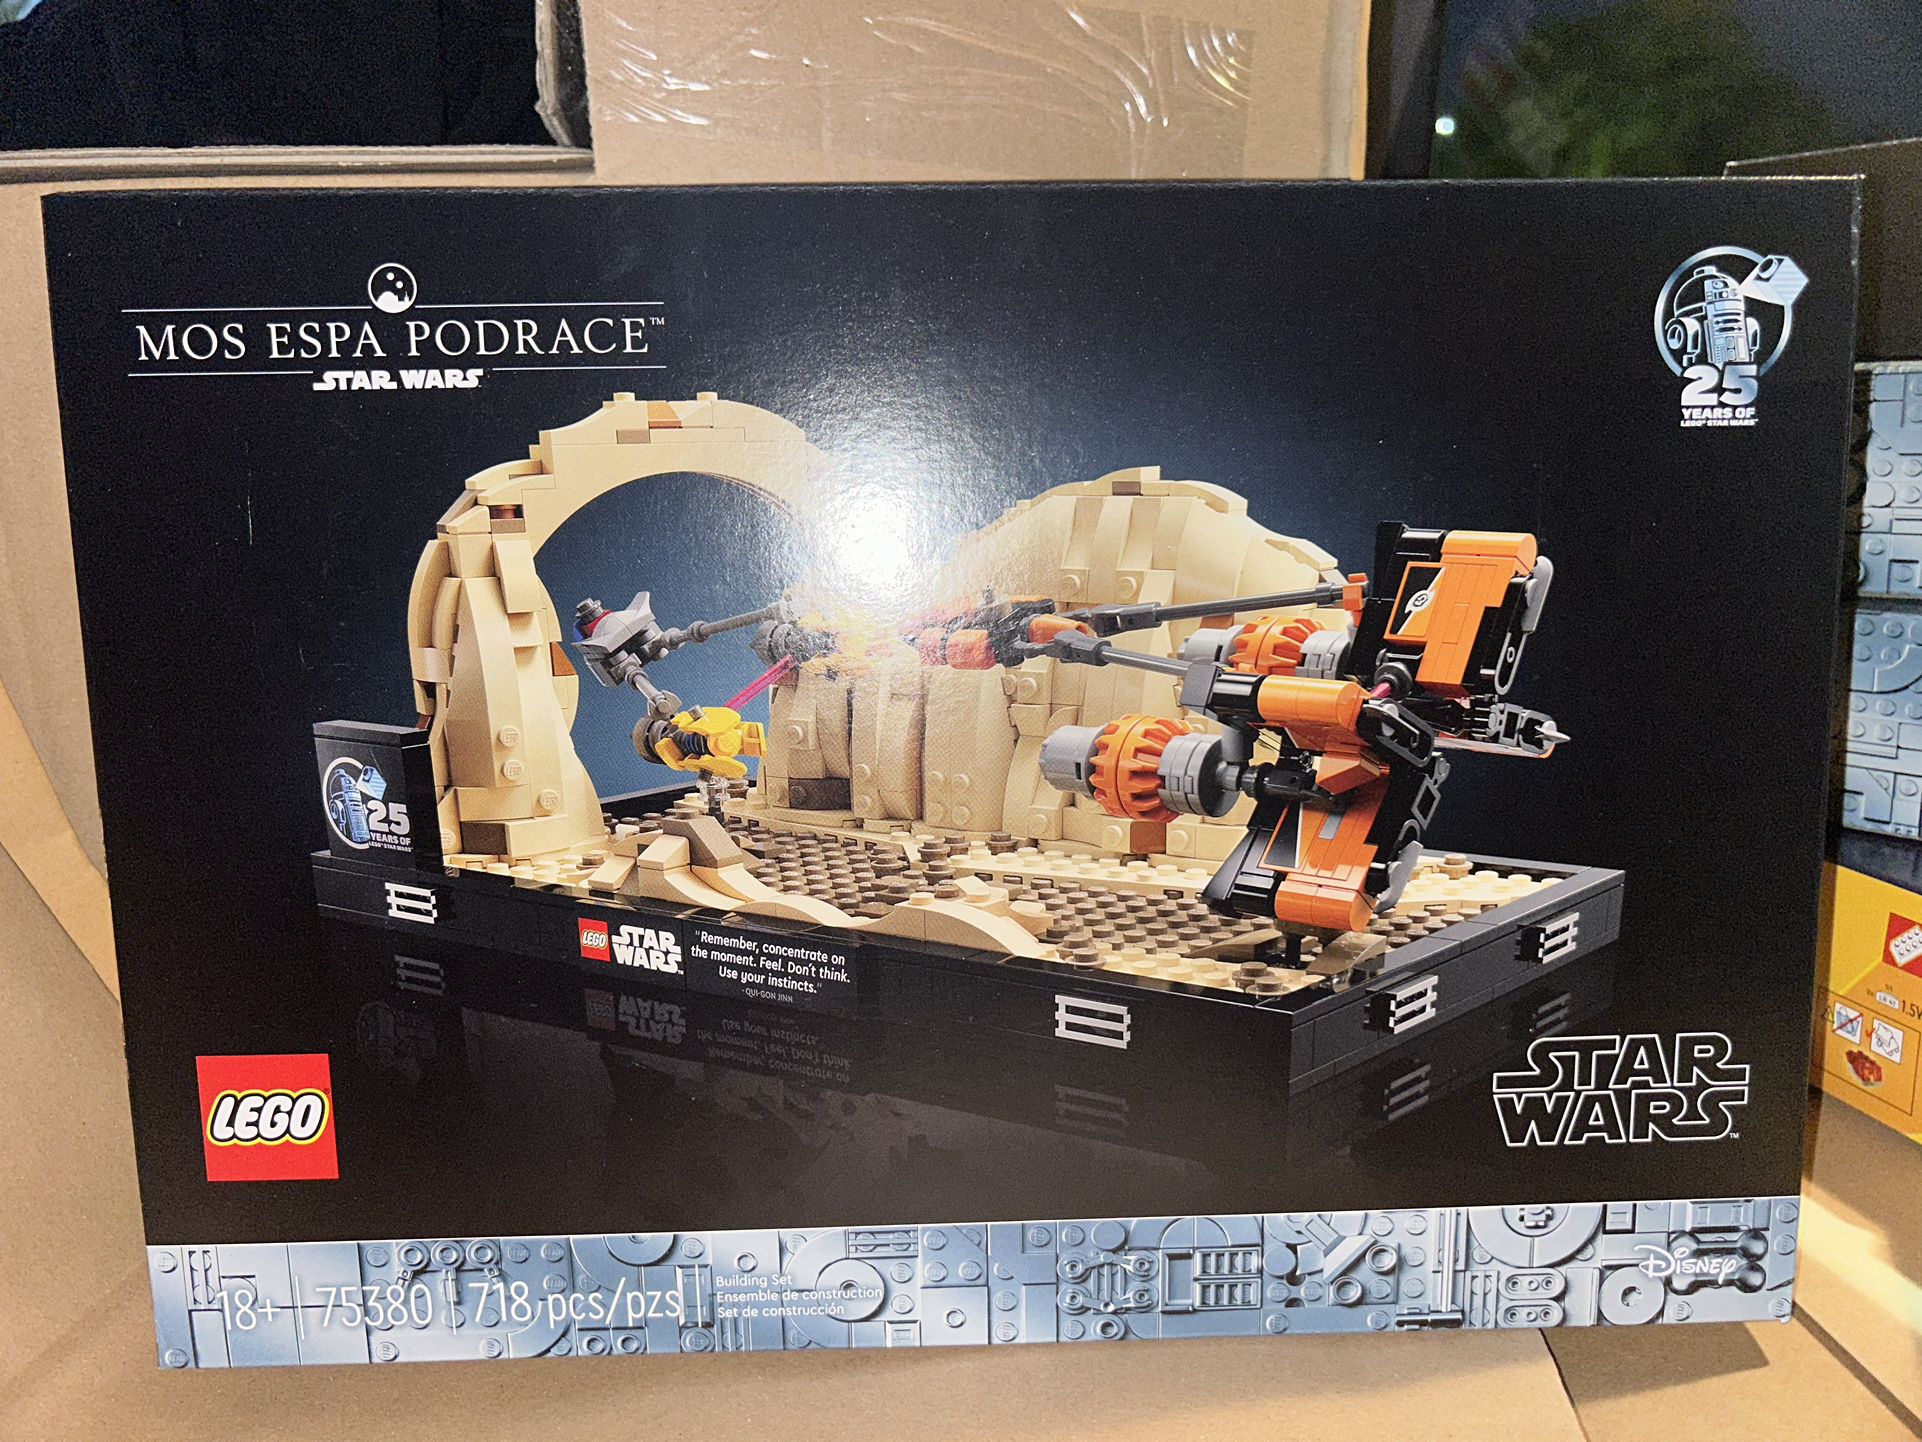  LEGO Star Wars Mos Espa Podrace Diorama Build and Display Set 75380